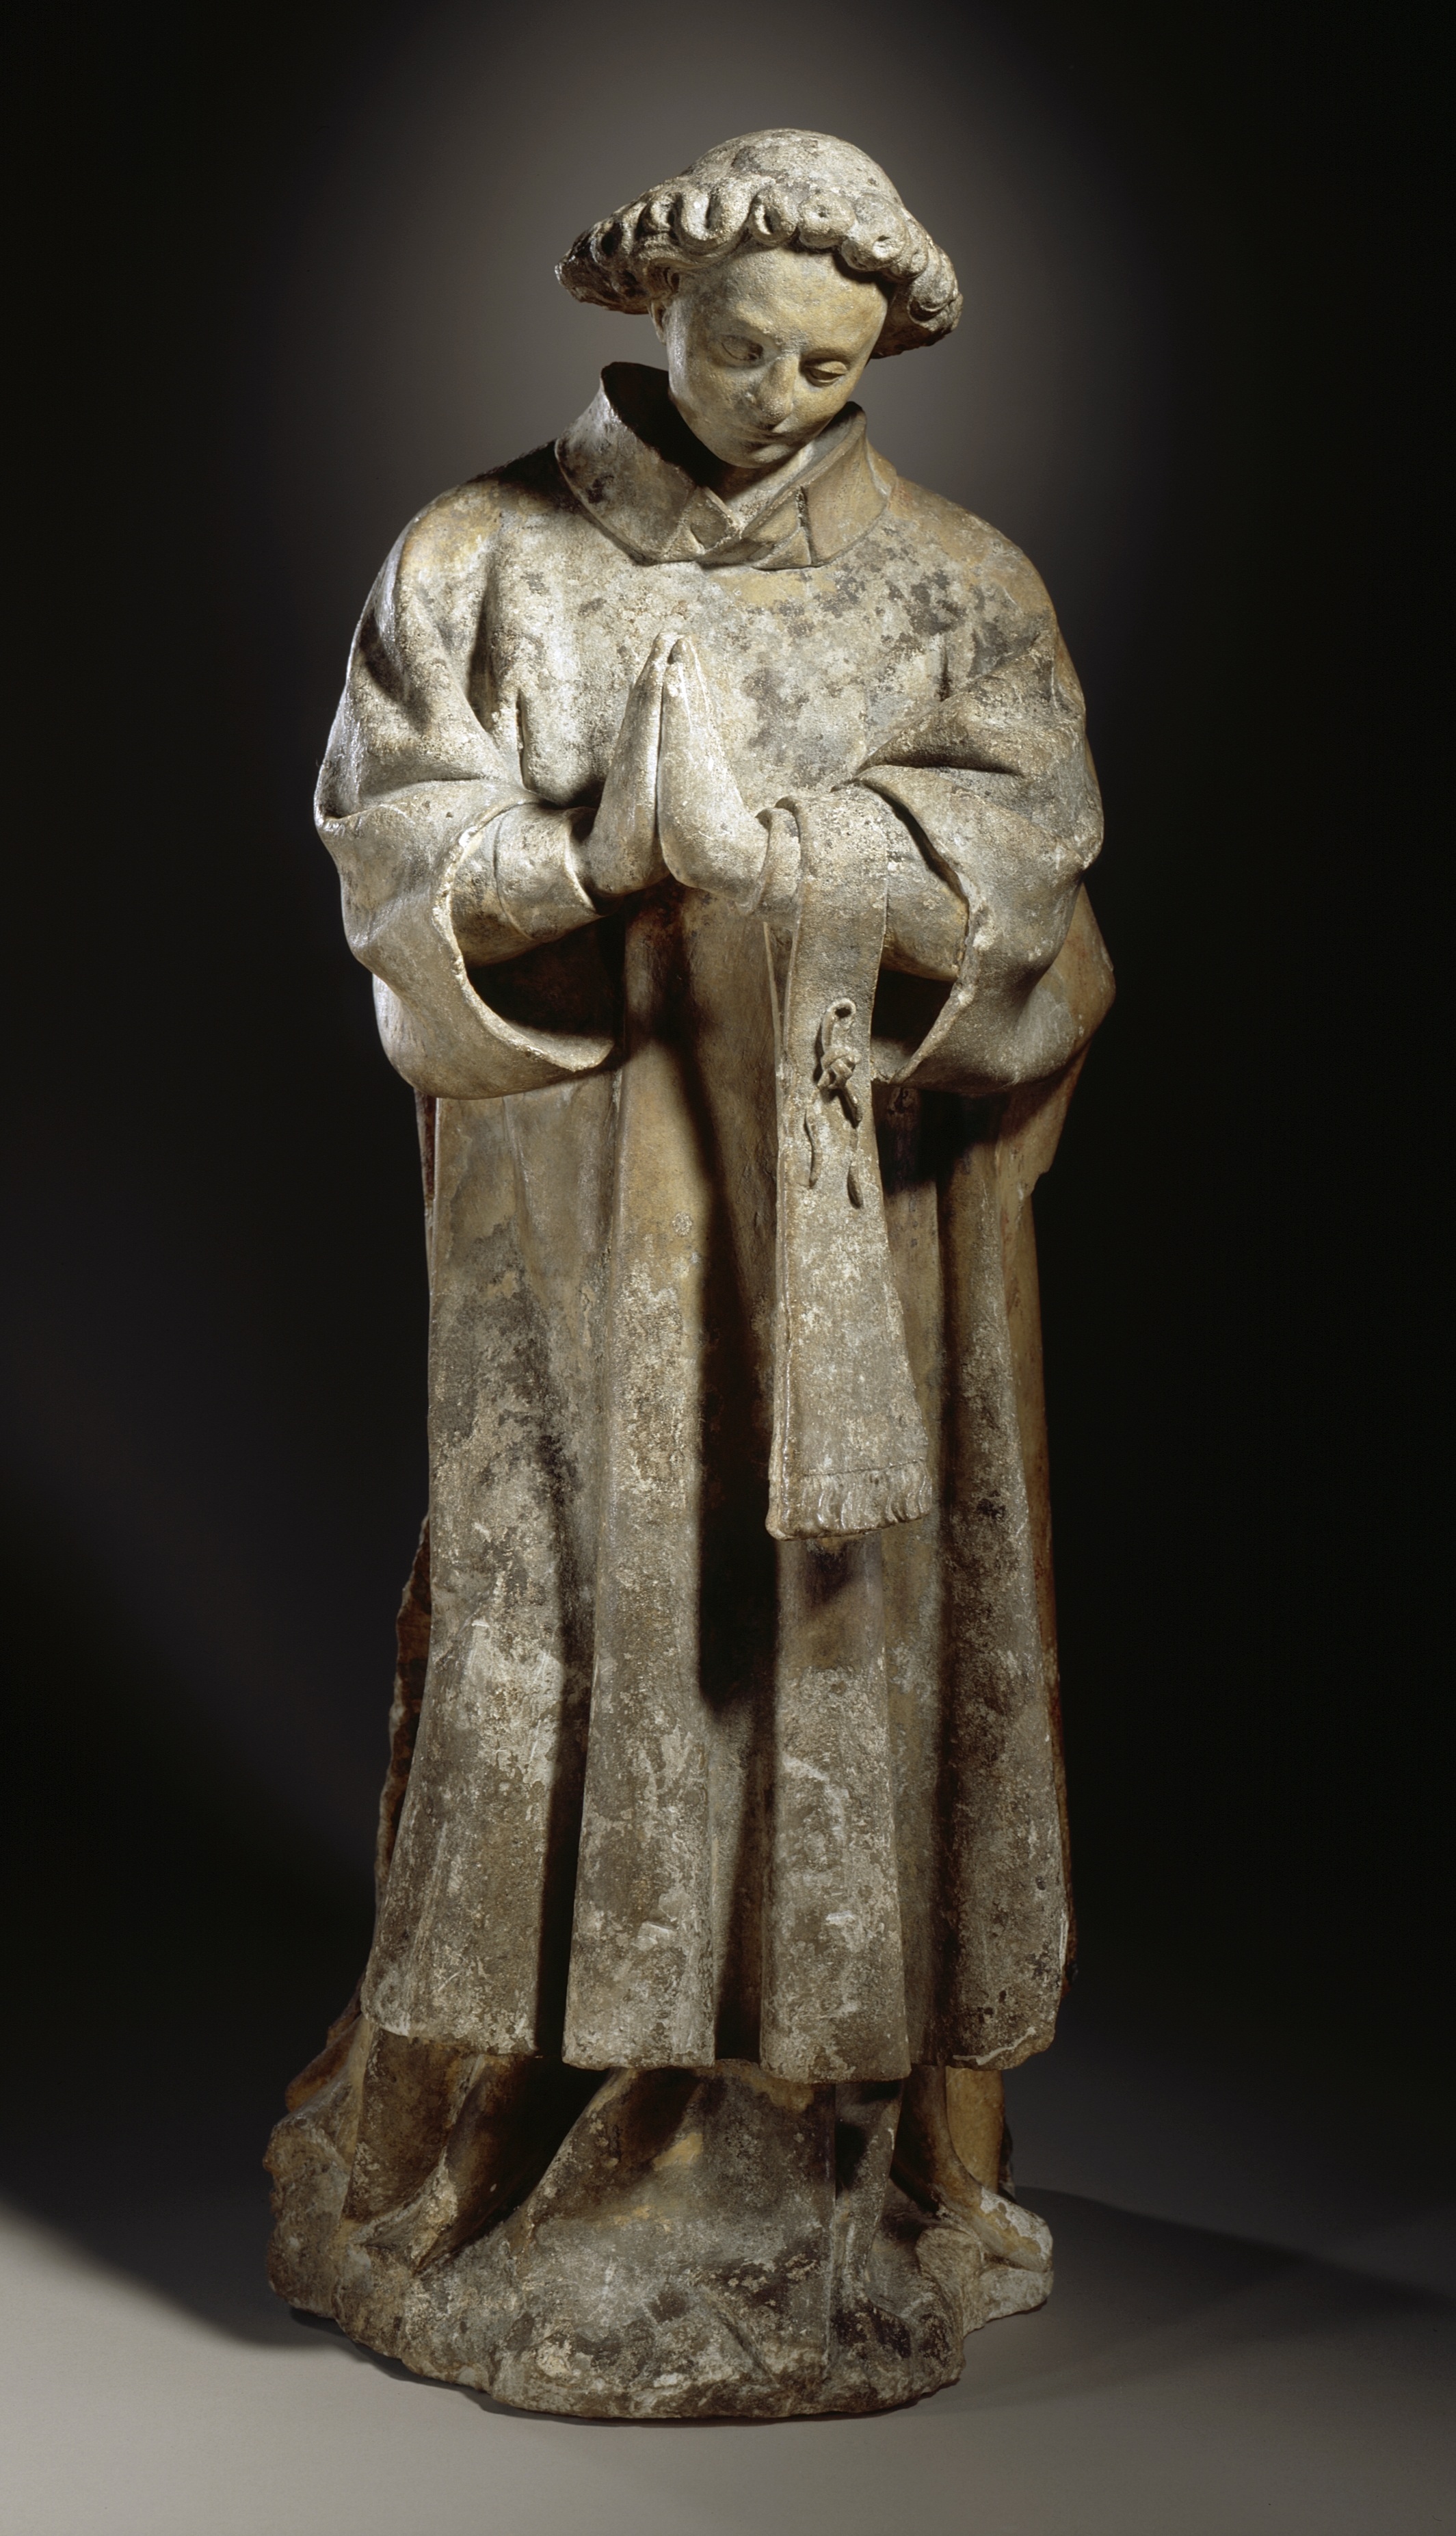 Ecclesiastical Figure in Prayer - French sculpture 1400-1420